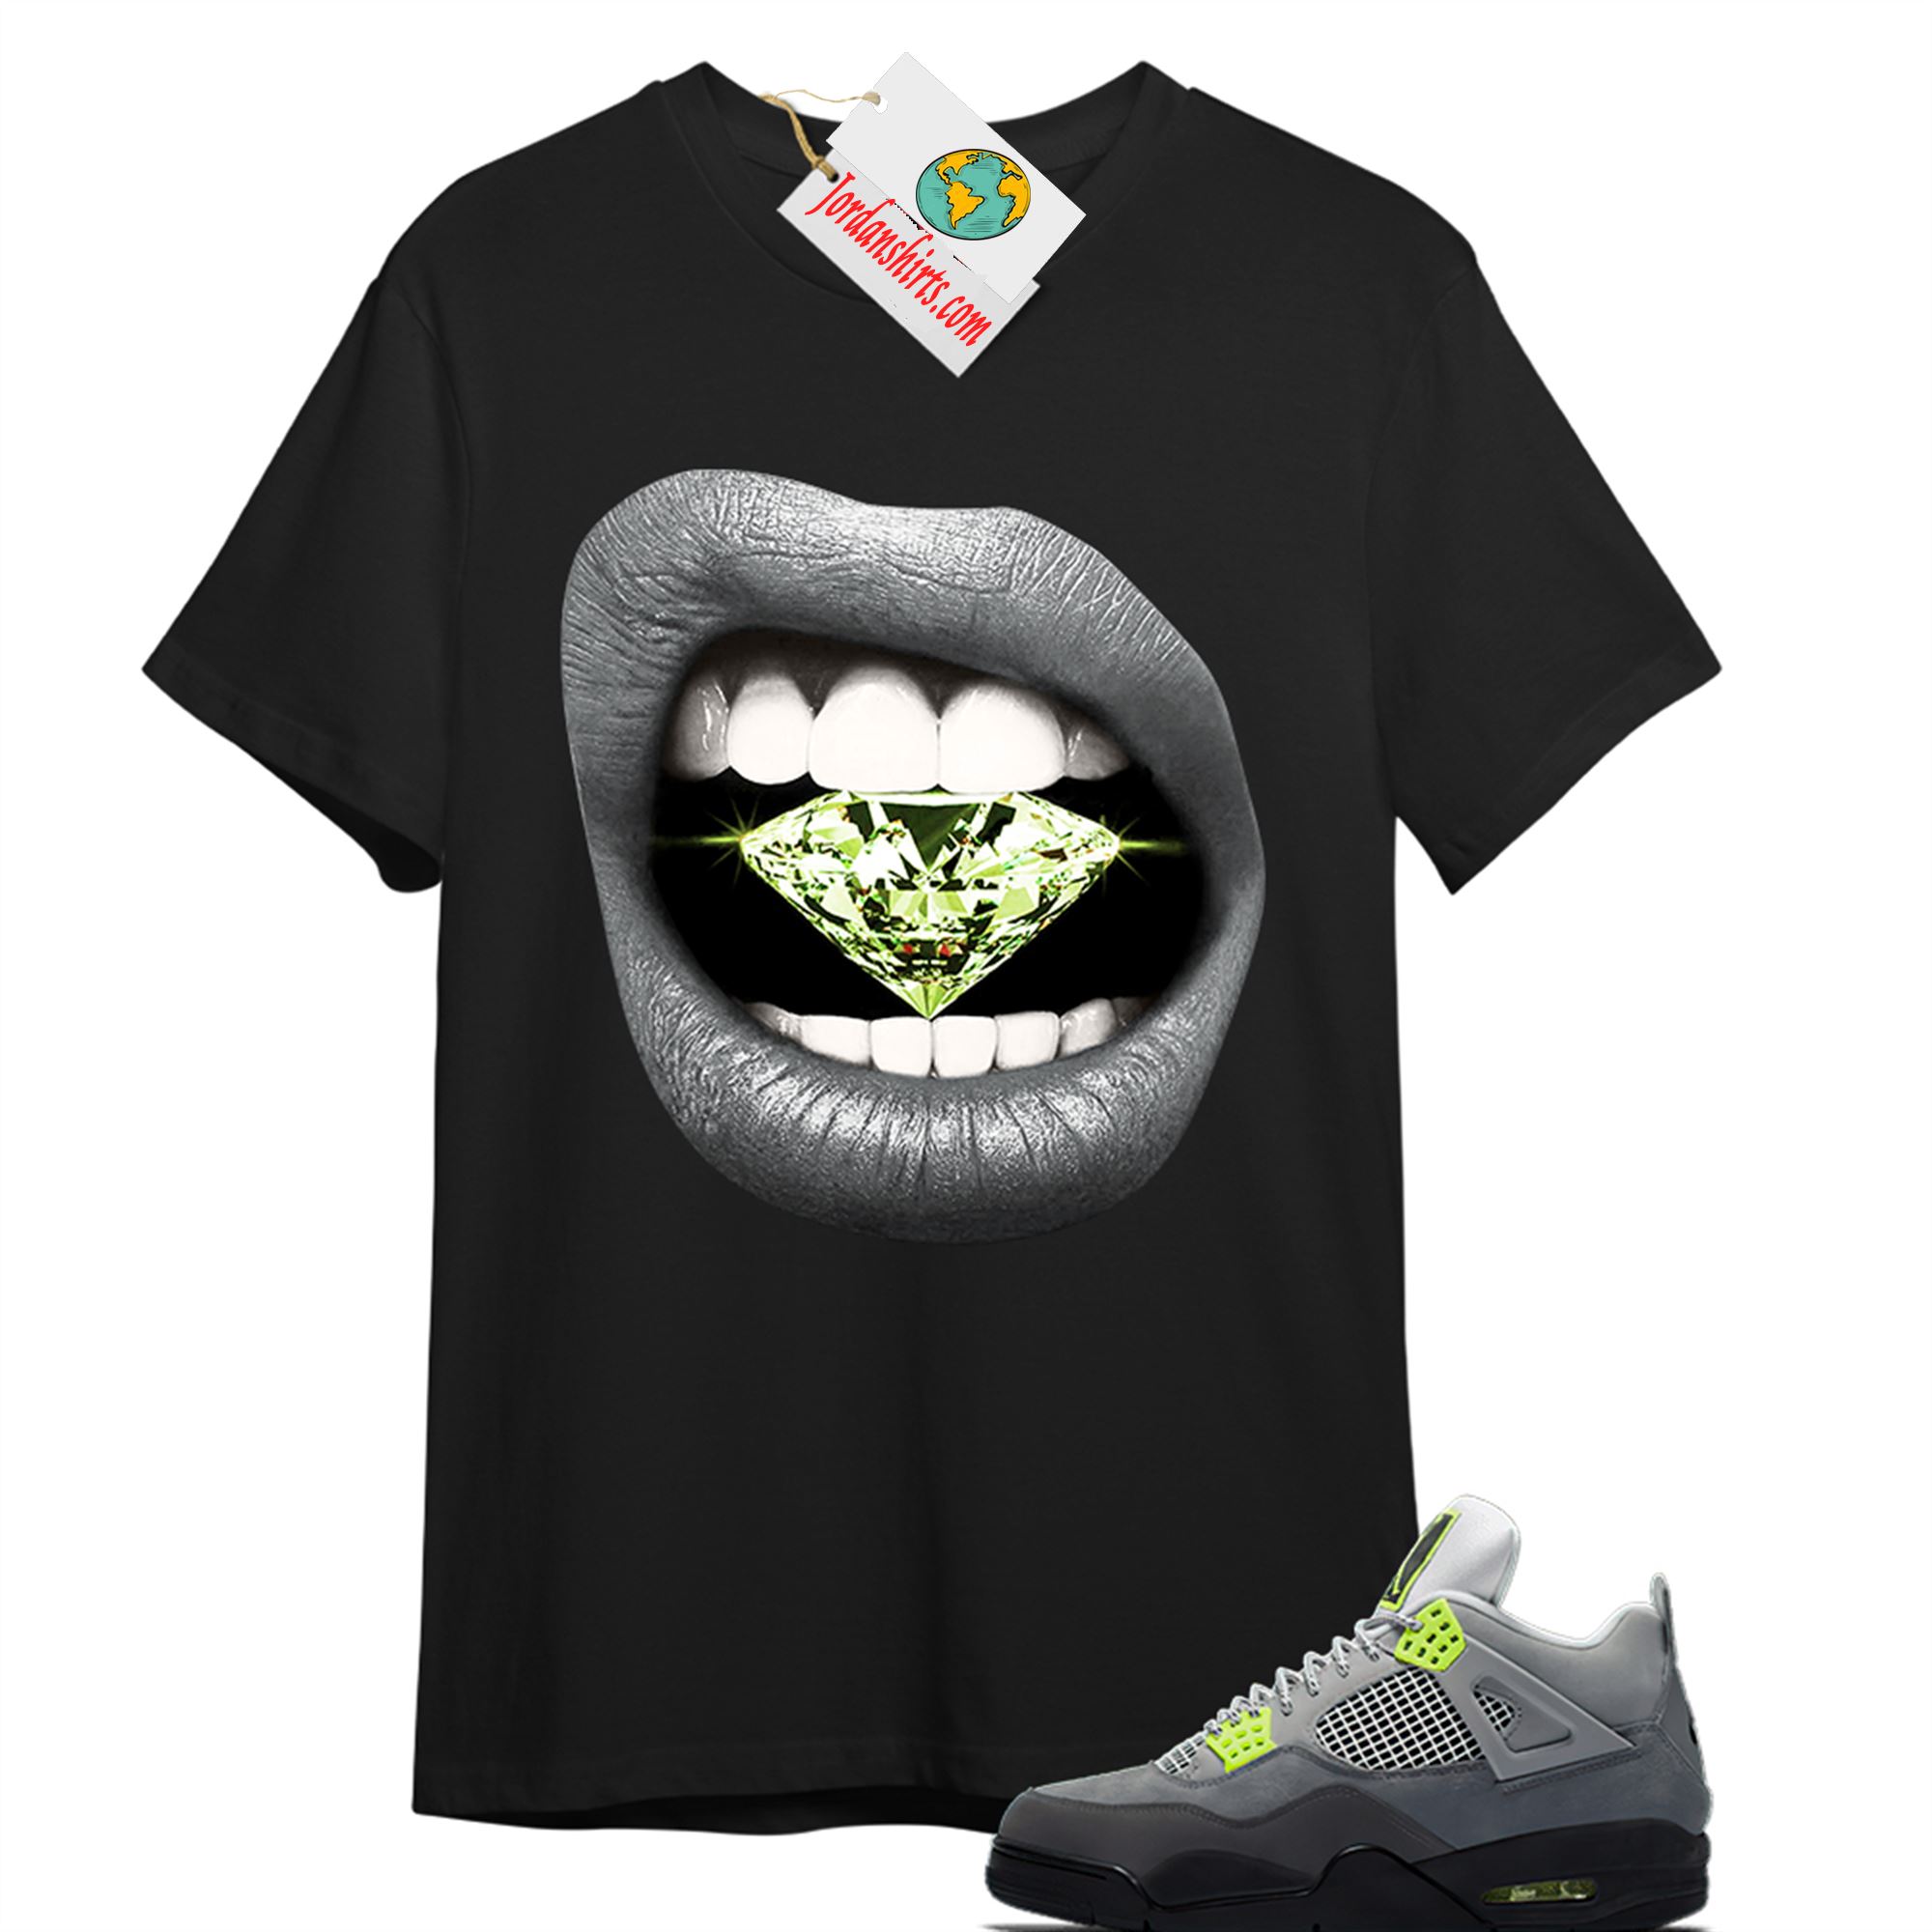 Jordan 4 Shirt, Diamond Lip Black T-shirt Air Jordan 4 Neon 95 4s Size Up To 5xl